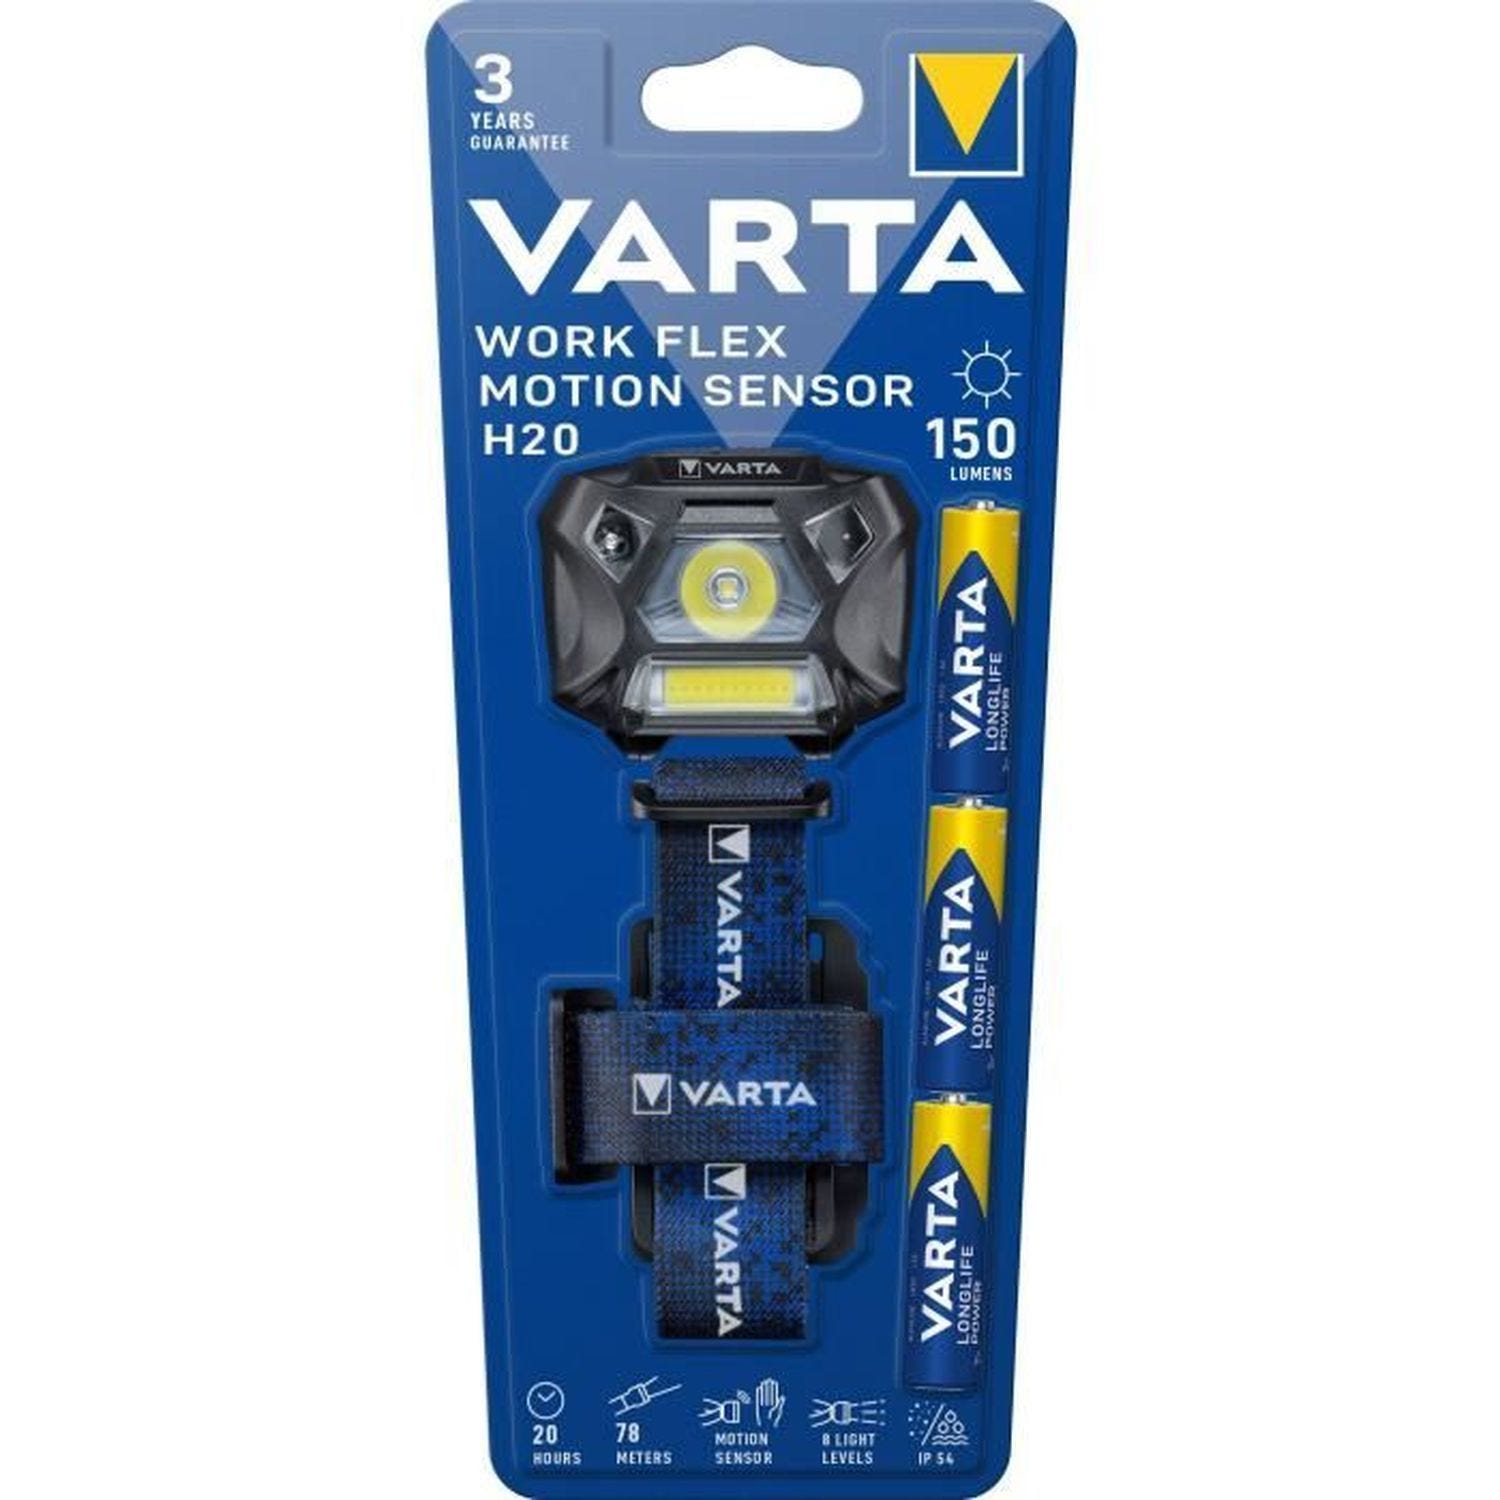 Frontale-VARTA-Work Flex Motion Sensor 20-150 lm - VARTA 0